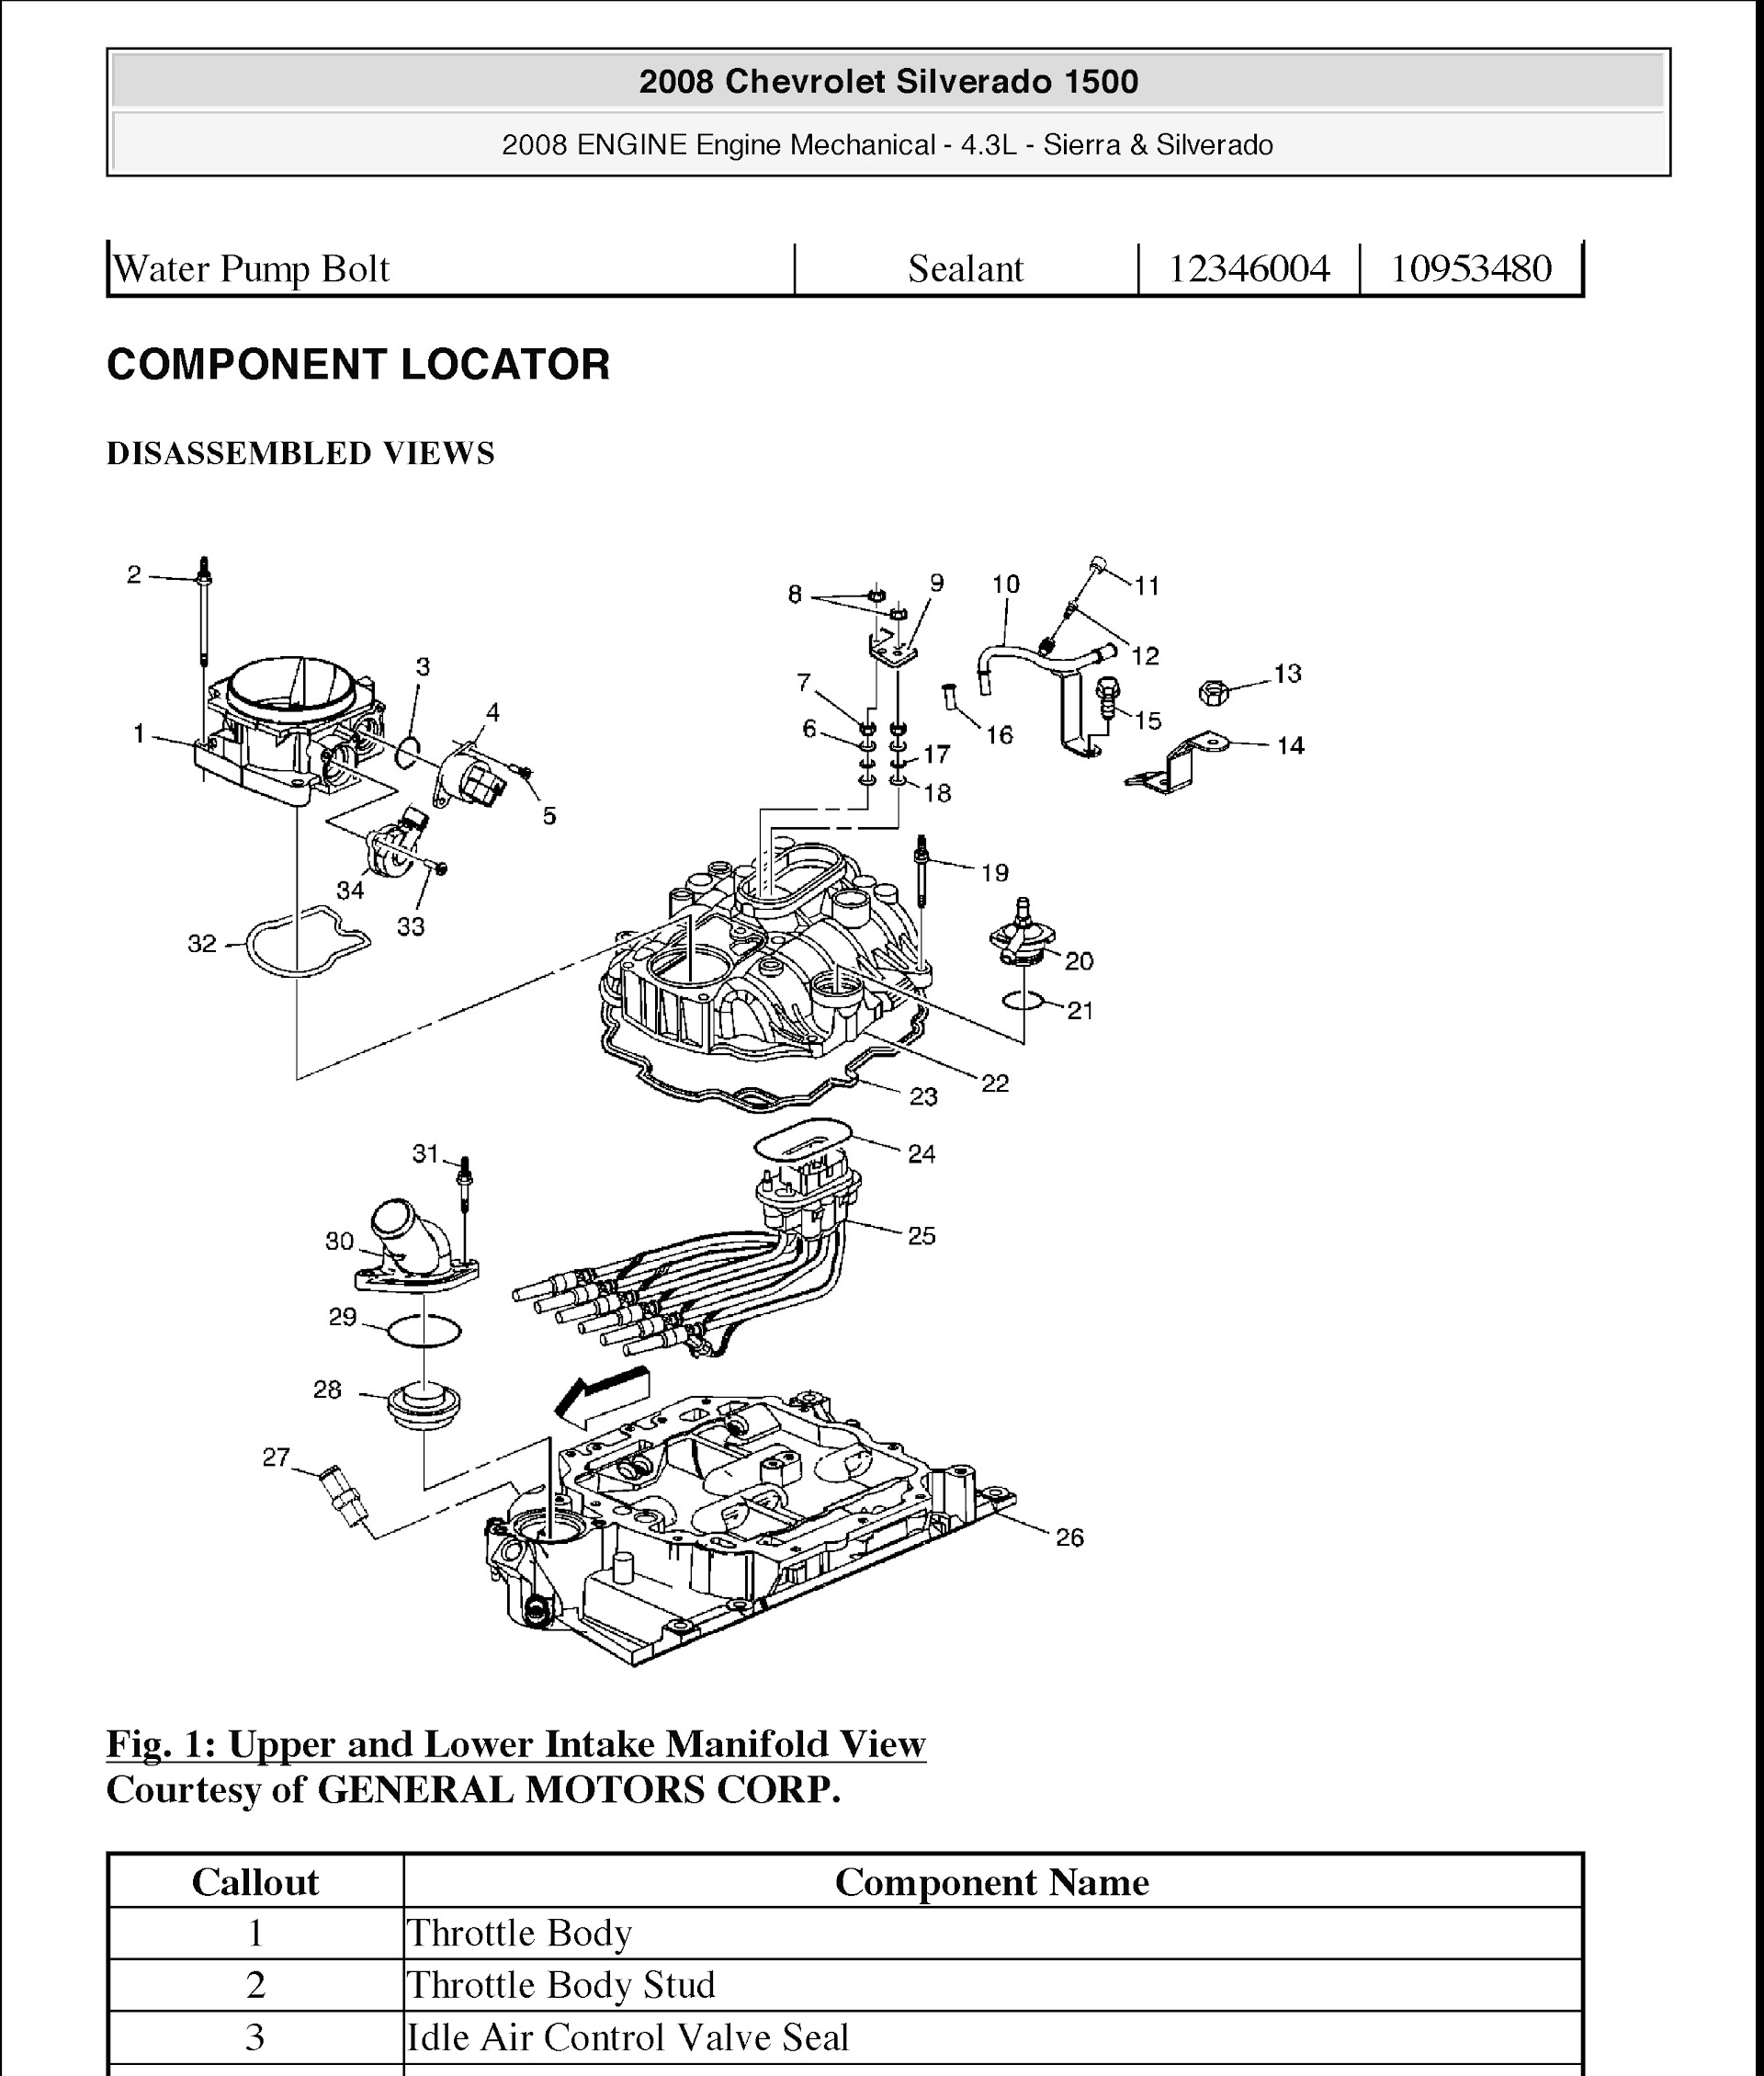 Chevrolet Silverado 1500 Repair Manual, Engine Mechanical